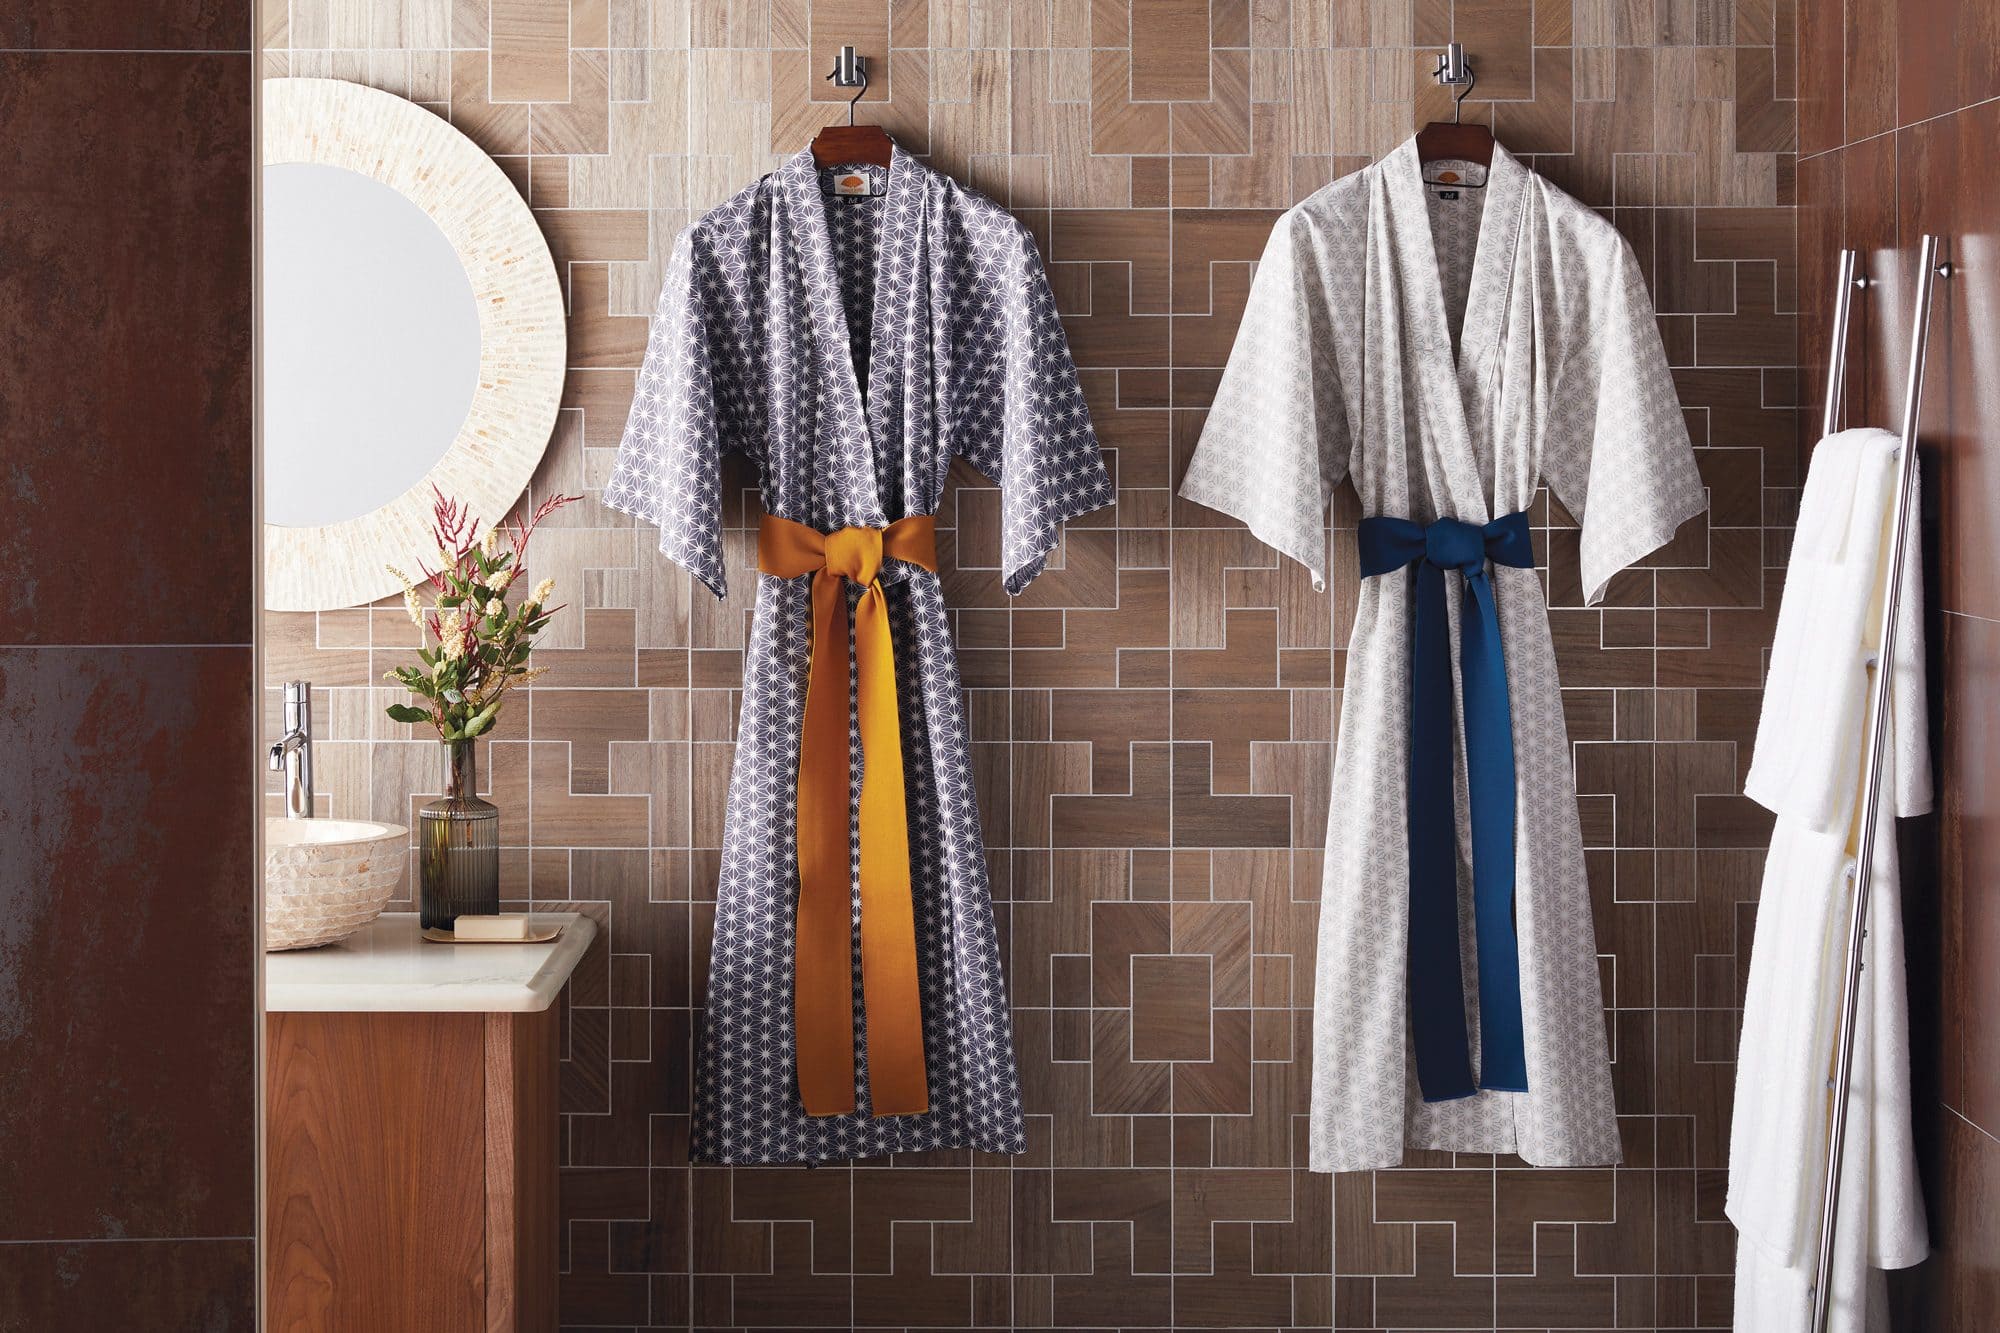 https://photos.mandarinoriental.com/is/image/MandarinOriental/dmo-Seven-essential-bathroom-buys-00-Hero-Japanese-Yukata-MAN-410-YUKATA-GREY-BLUE